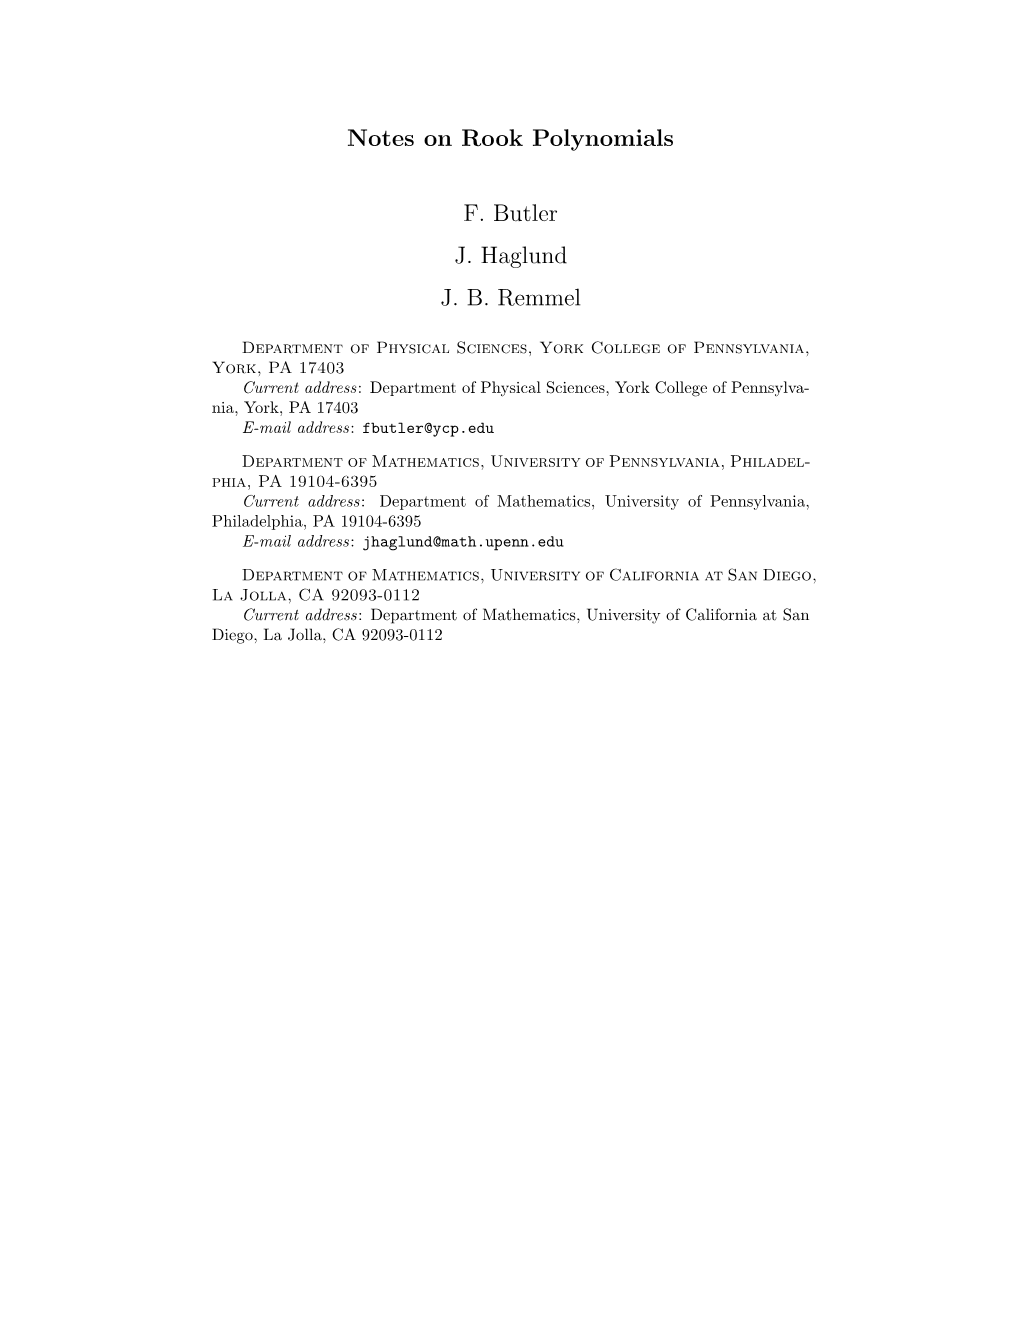 Notes on Rook Polynomials F. Butler J. Haglund J. B. Remmel